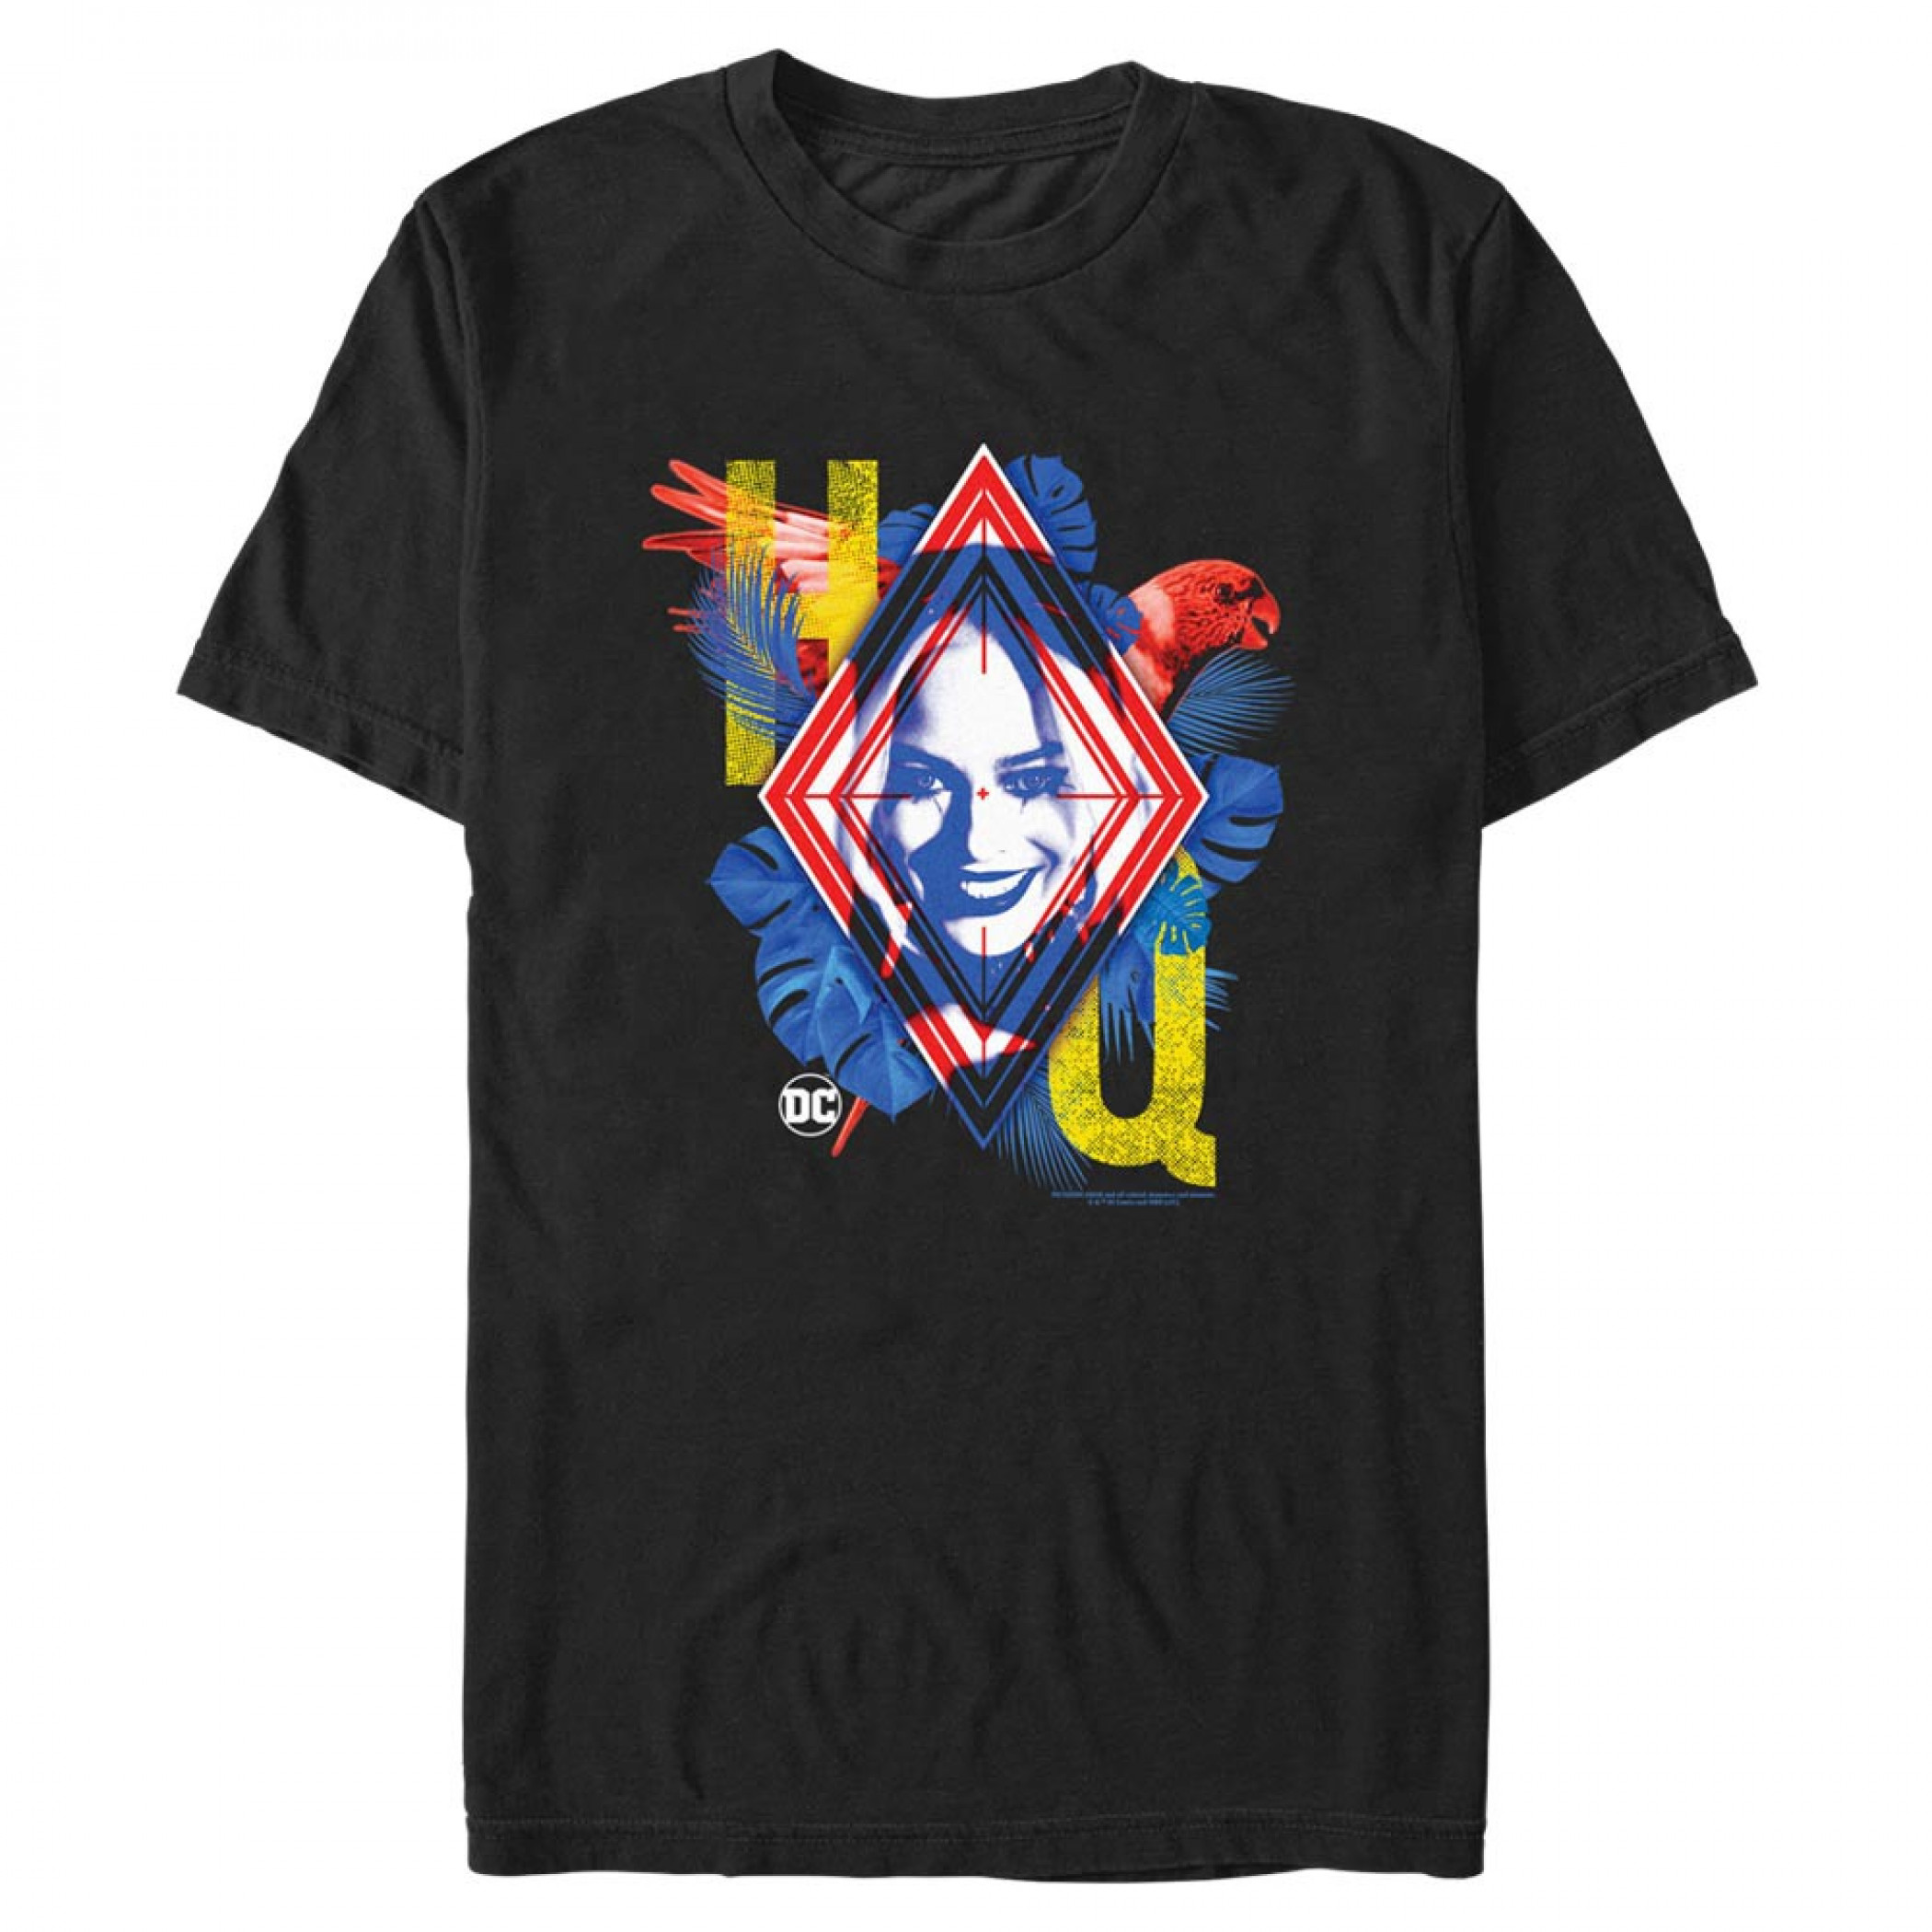 The Suicide Squad Harley Quinn HQ Character Portrait Men's T-Shirt